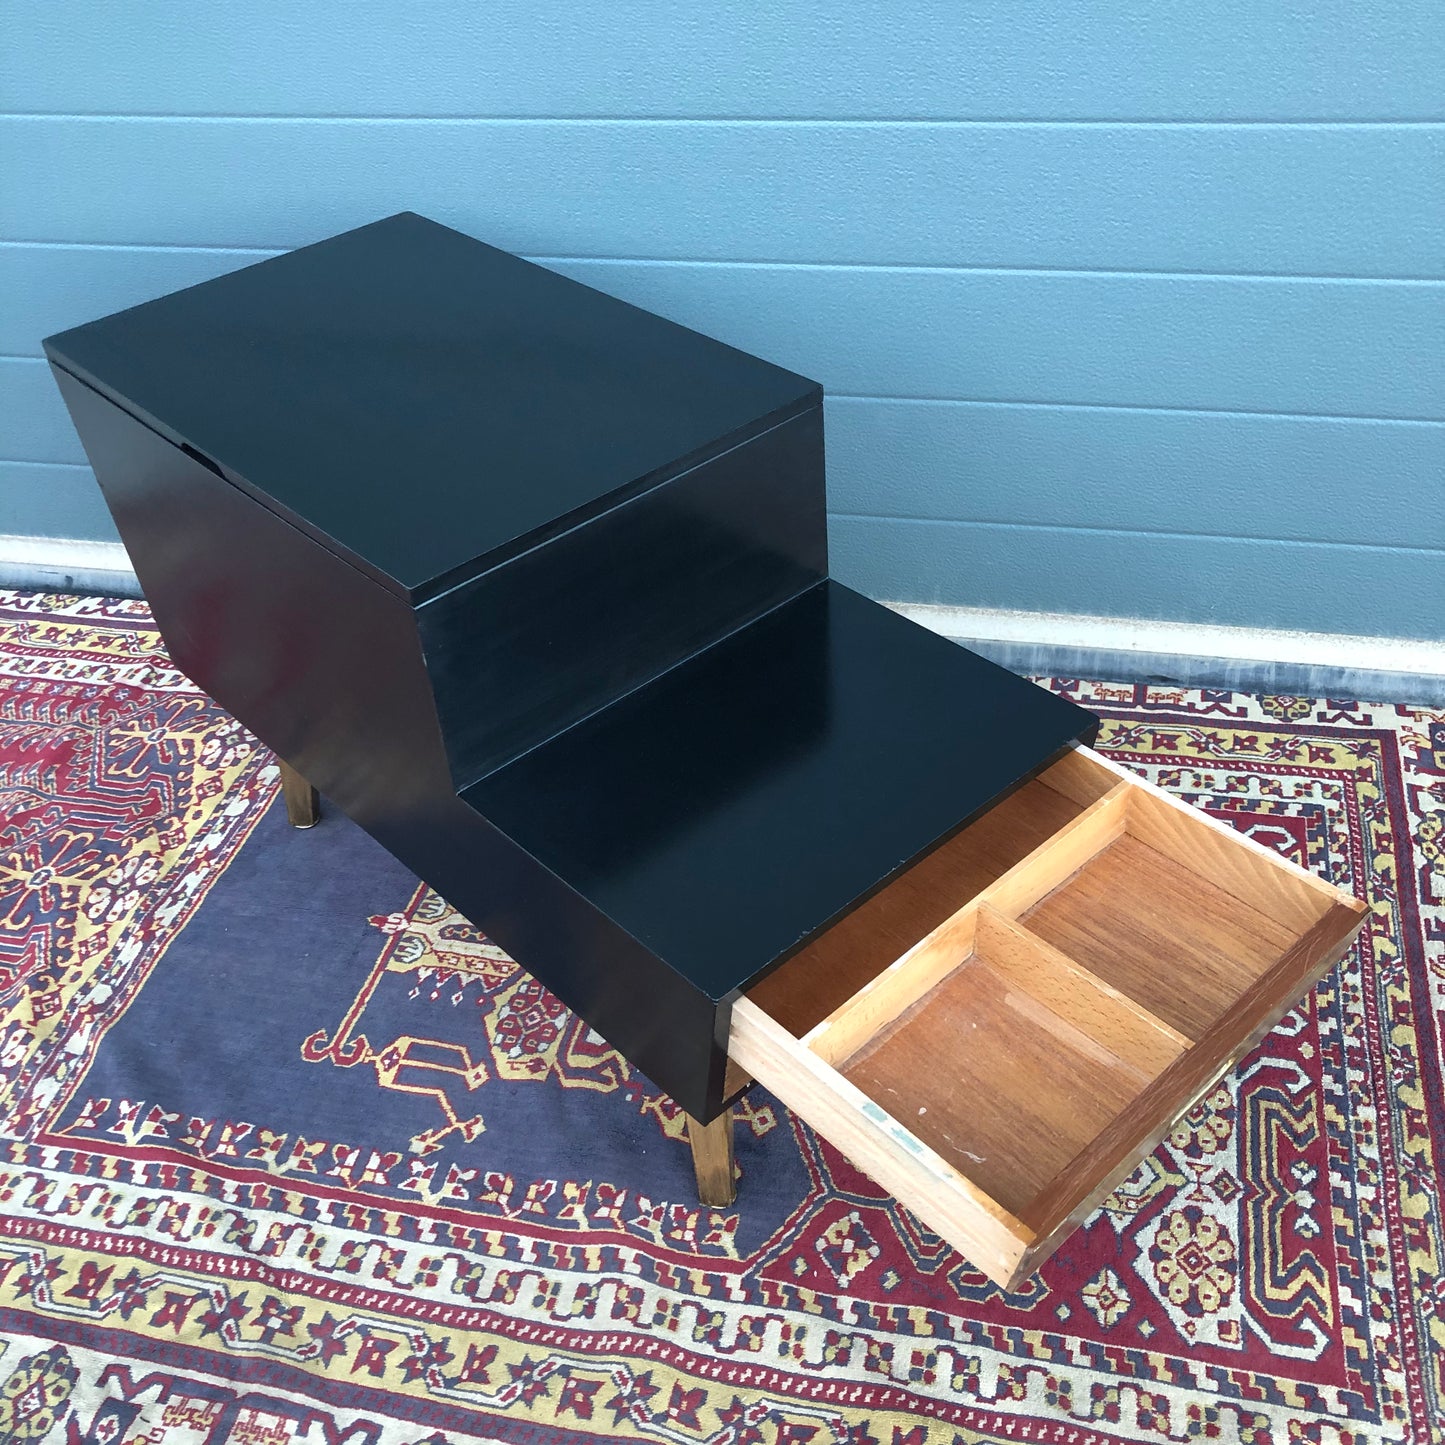 Stylish Retro Workbox / Upcycled Mid Century Sewing Box ( SOLD )